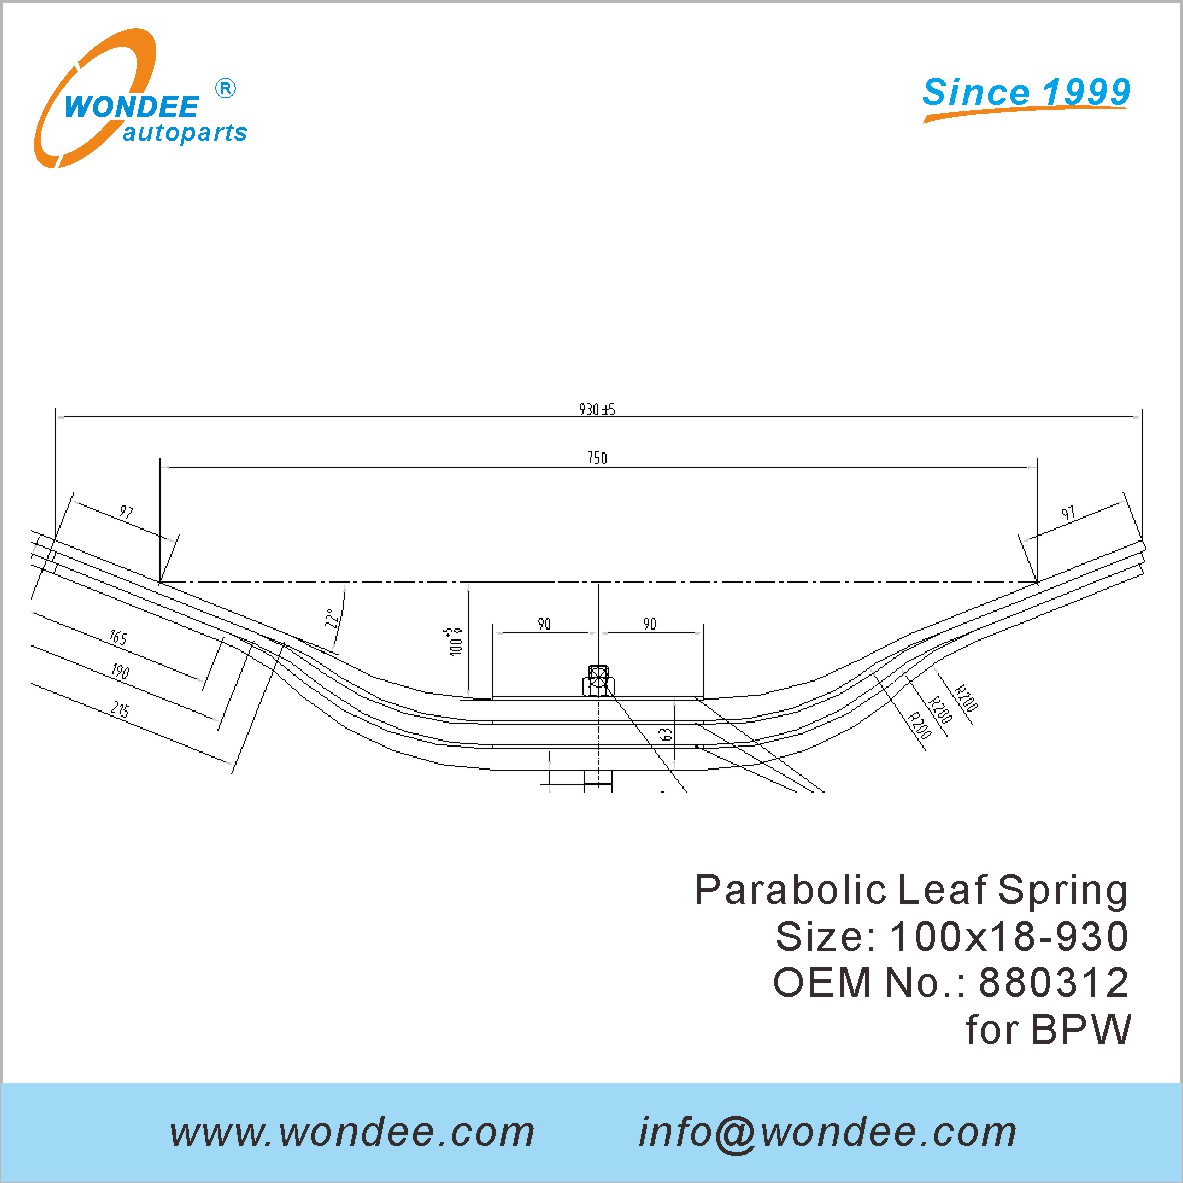 WONDEE light duty parabolic Leaf Spring OEM 880312 for BPW